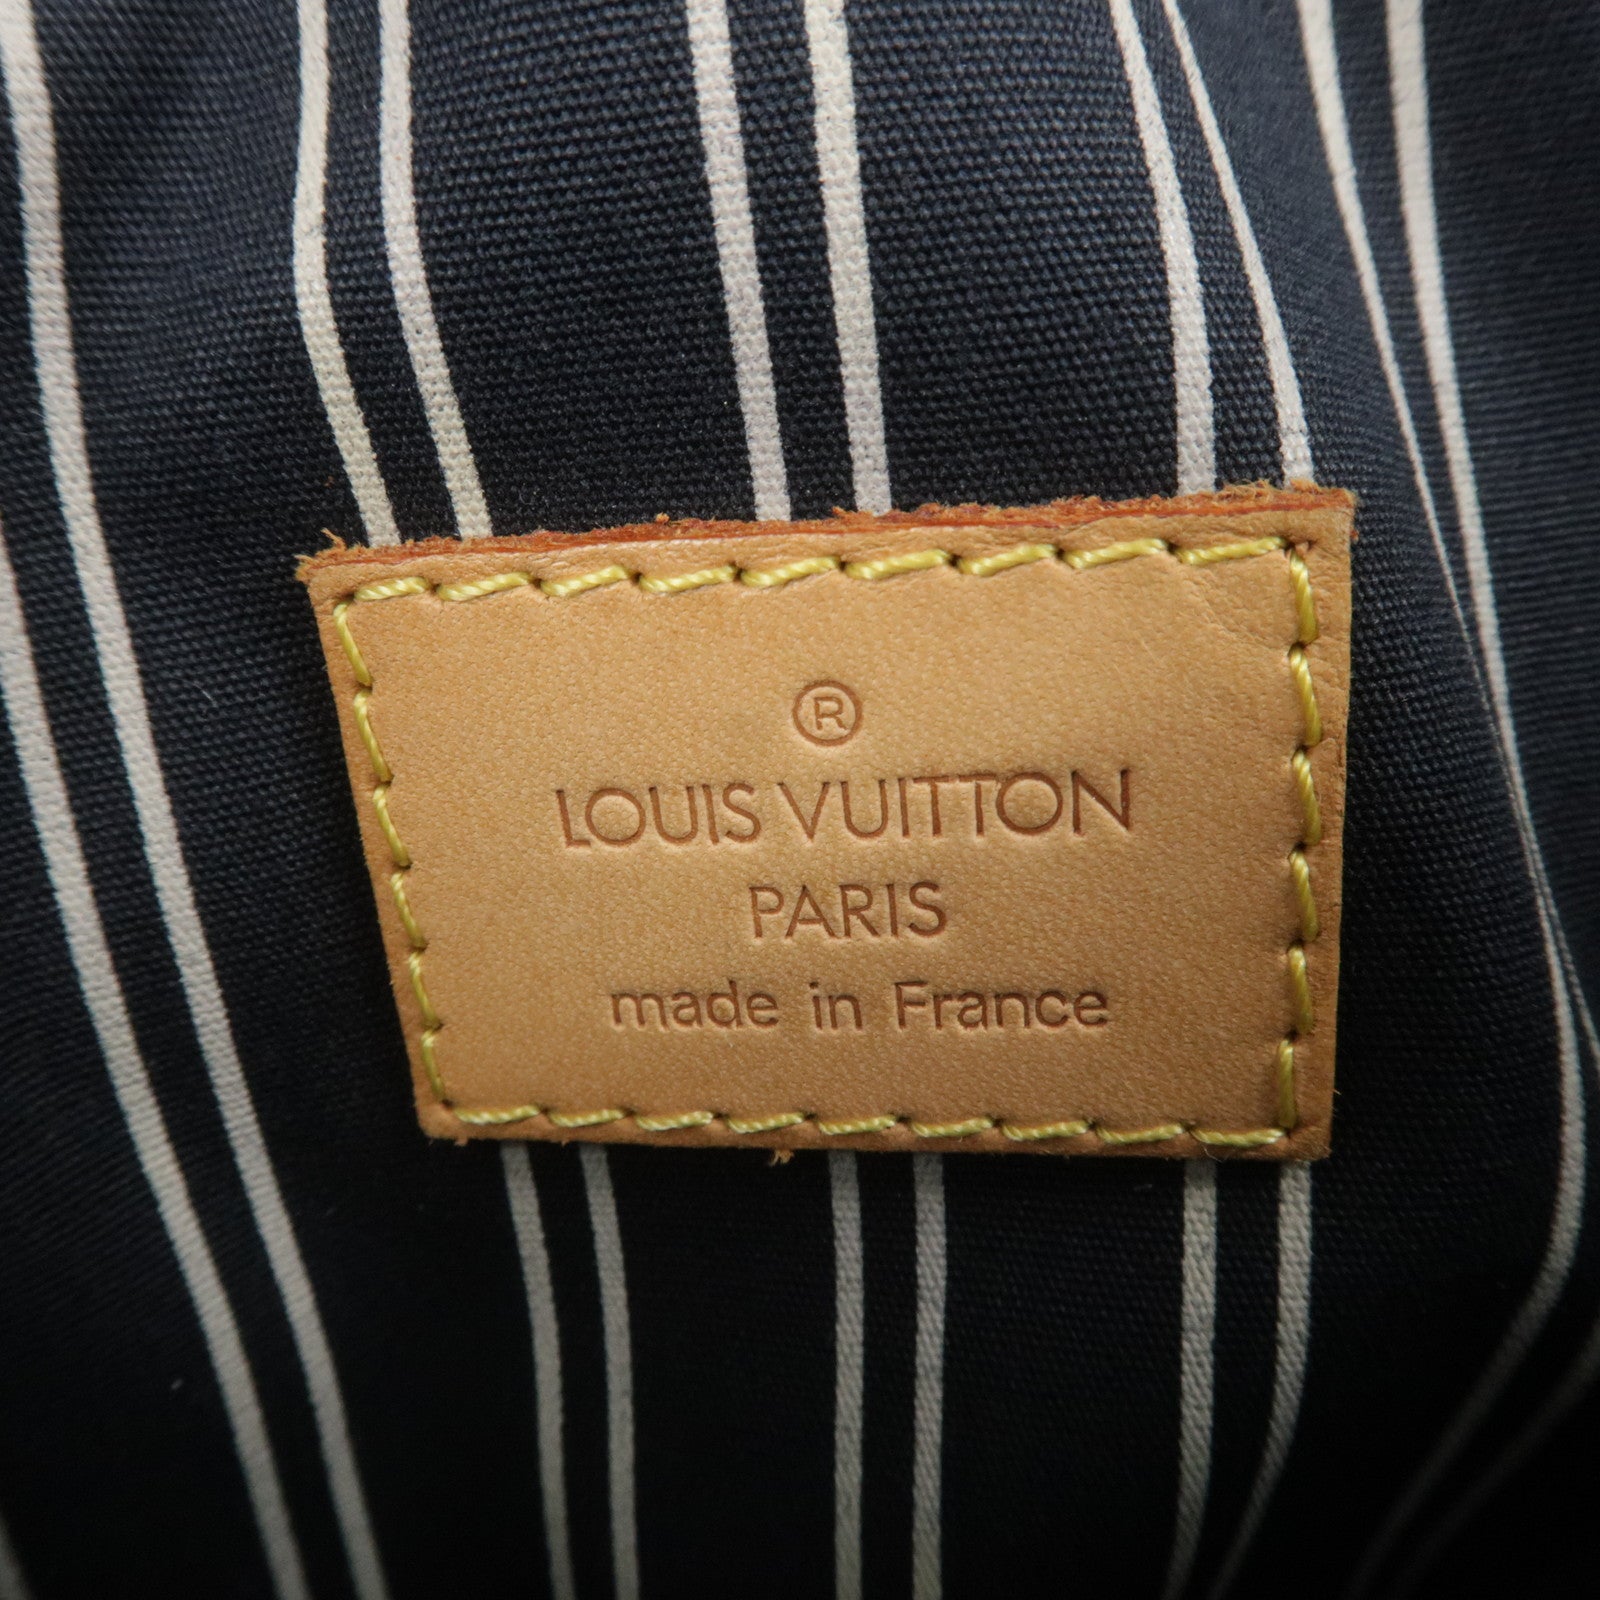 Brown Louis Vuitton Antigua Besace PM Crossbody Bag